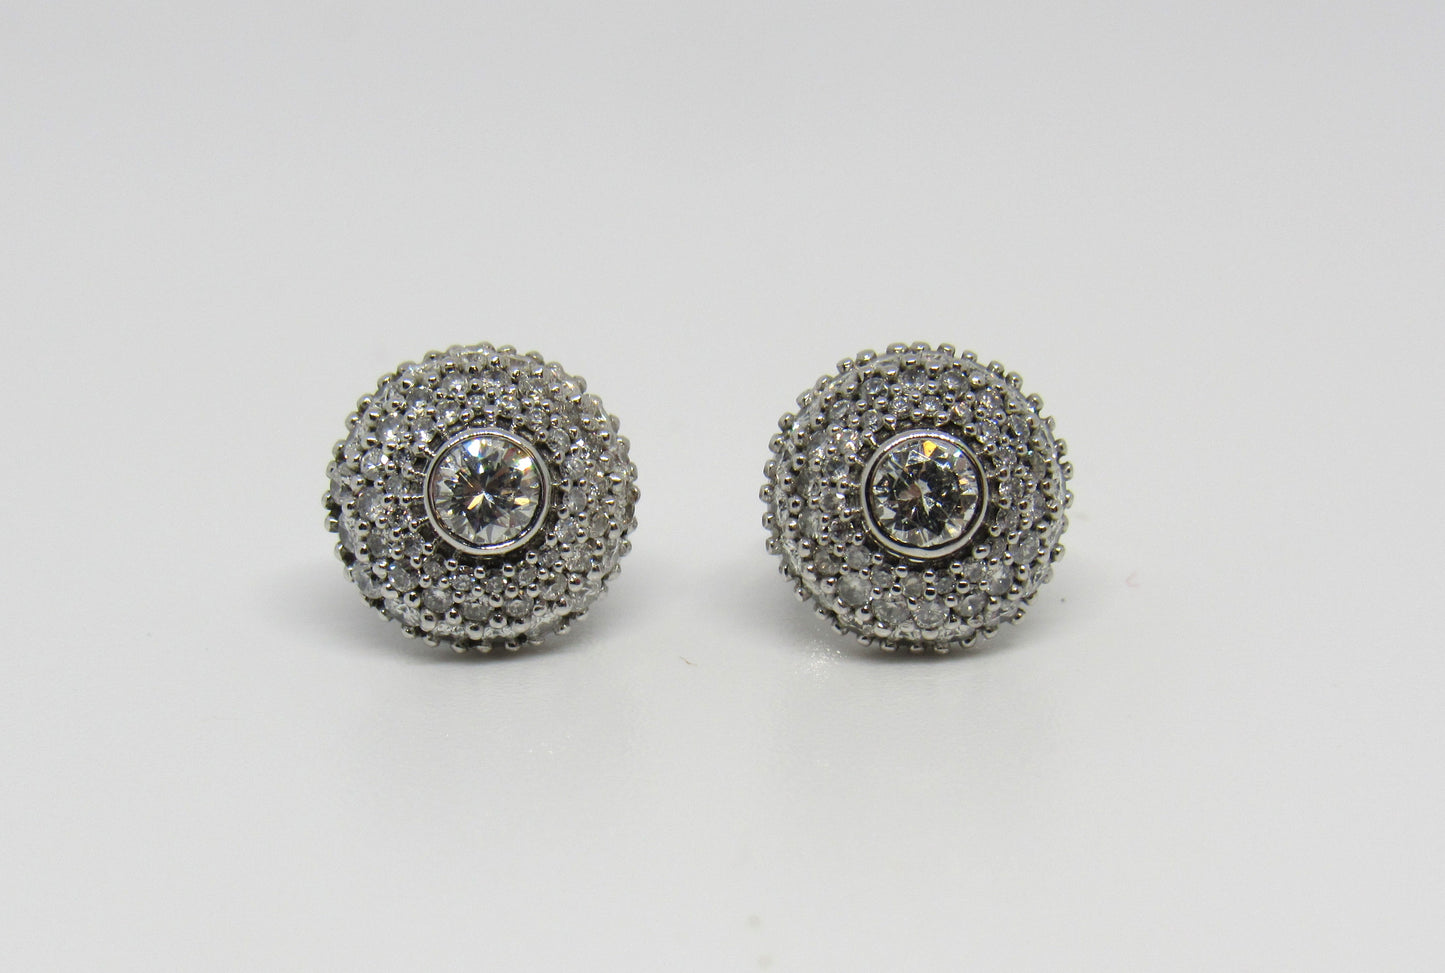 Sonia Bitton Galerie de Bijoux® 14K White Gold Diamond Double Halo Stud Earrings